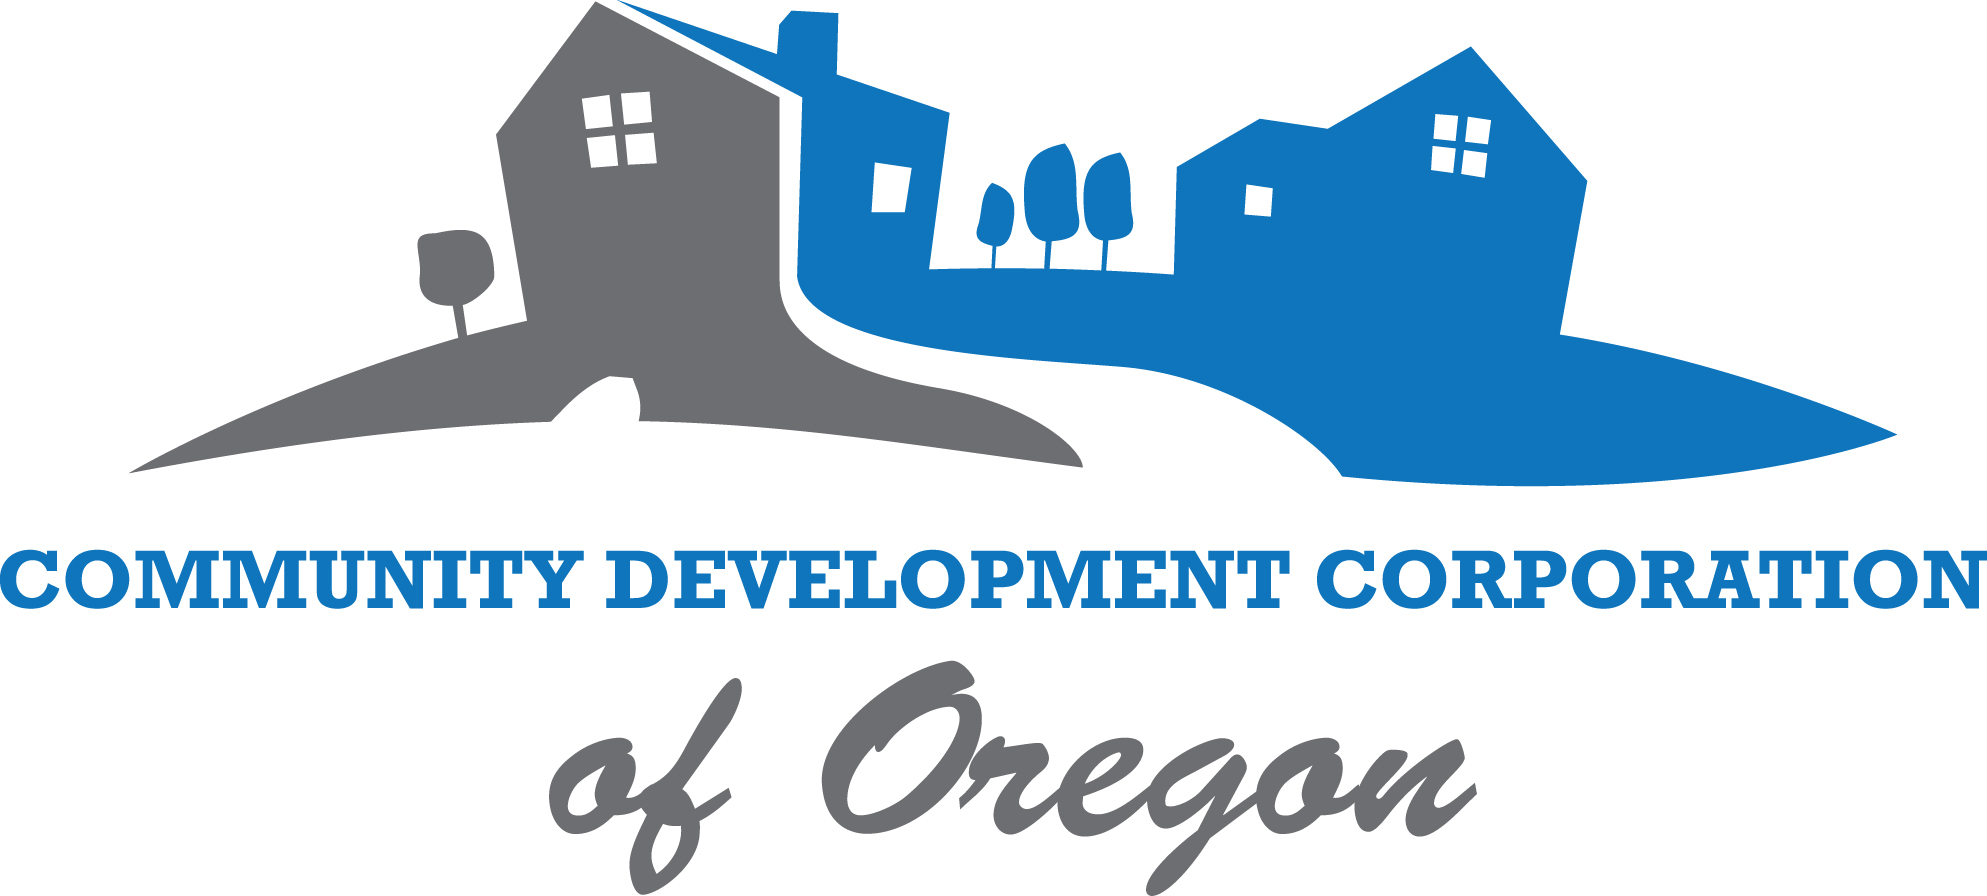 Community Develoment Corporation of Oregon